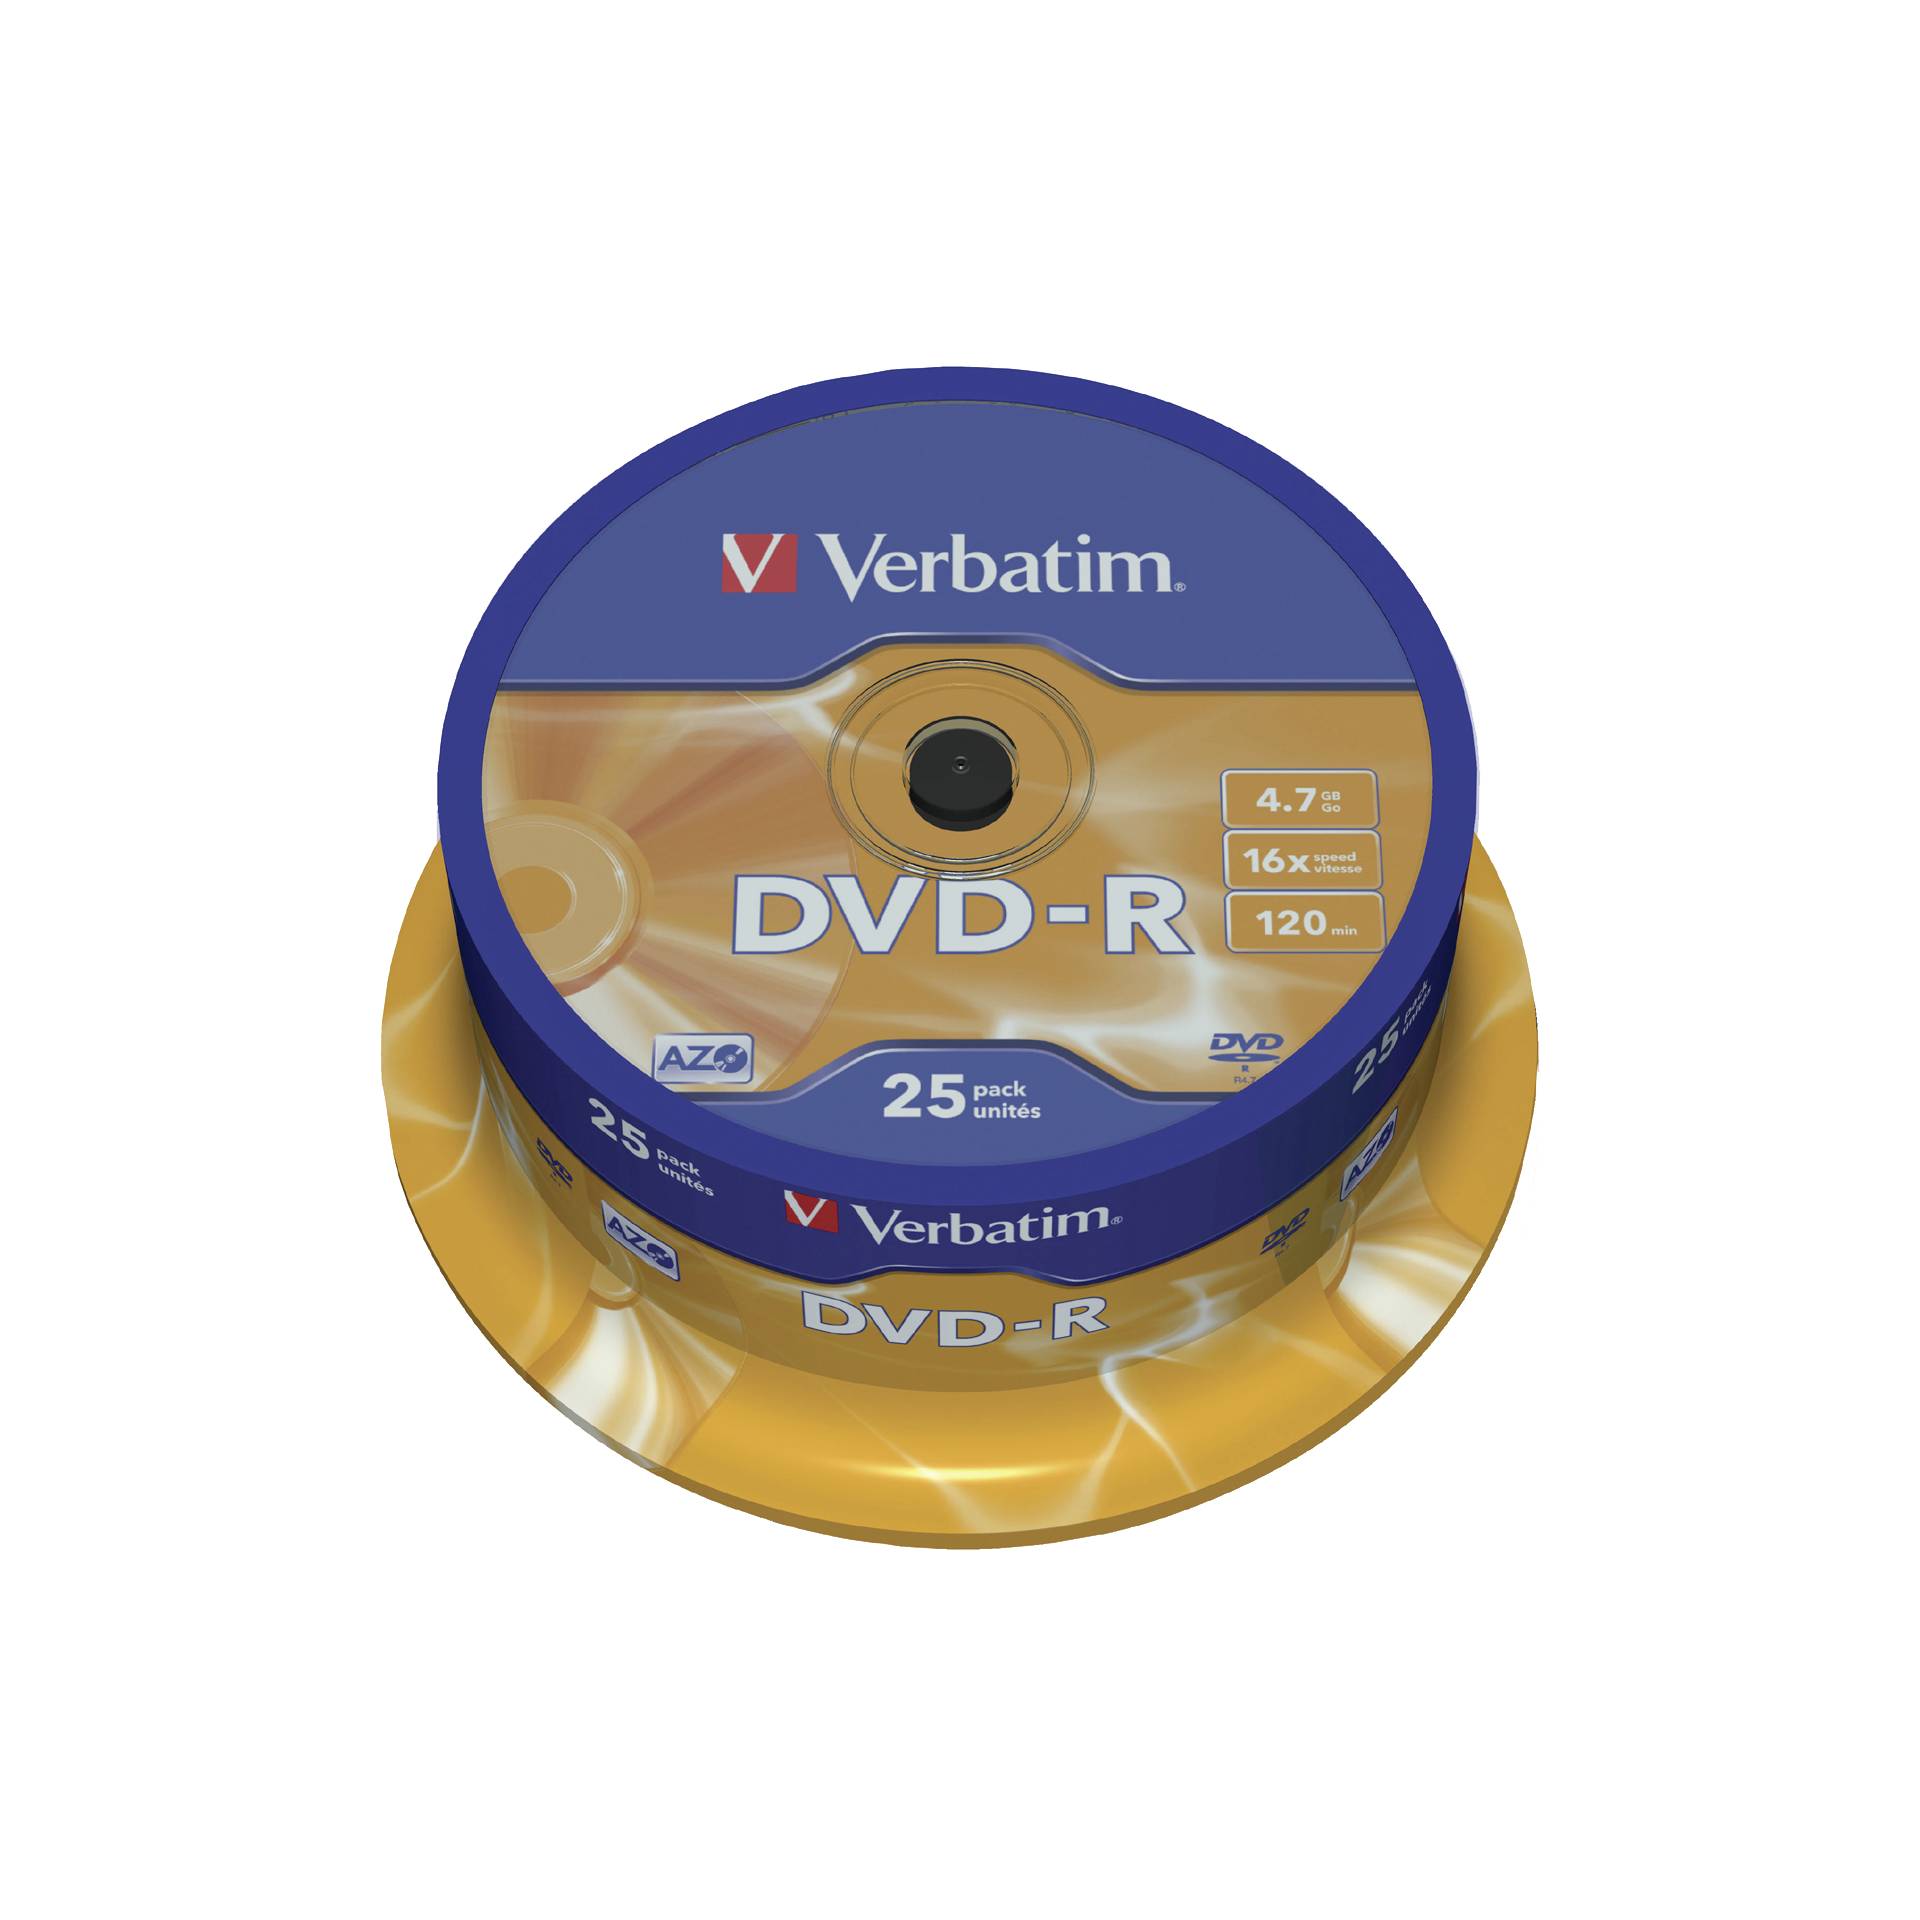 1x25 Verbatim DVD-R 4,7GB 16x Speed, opaco argento